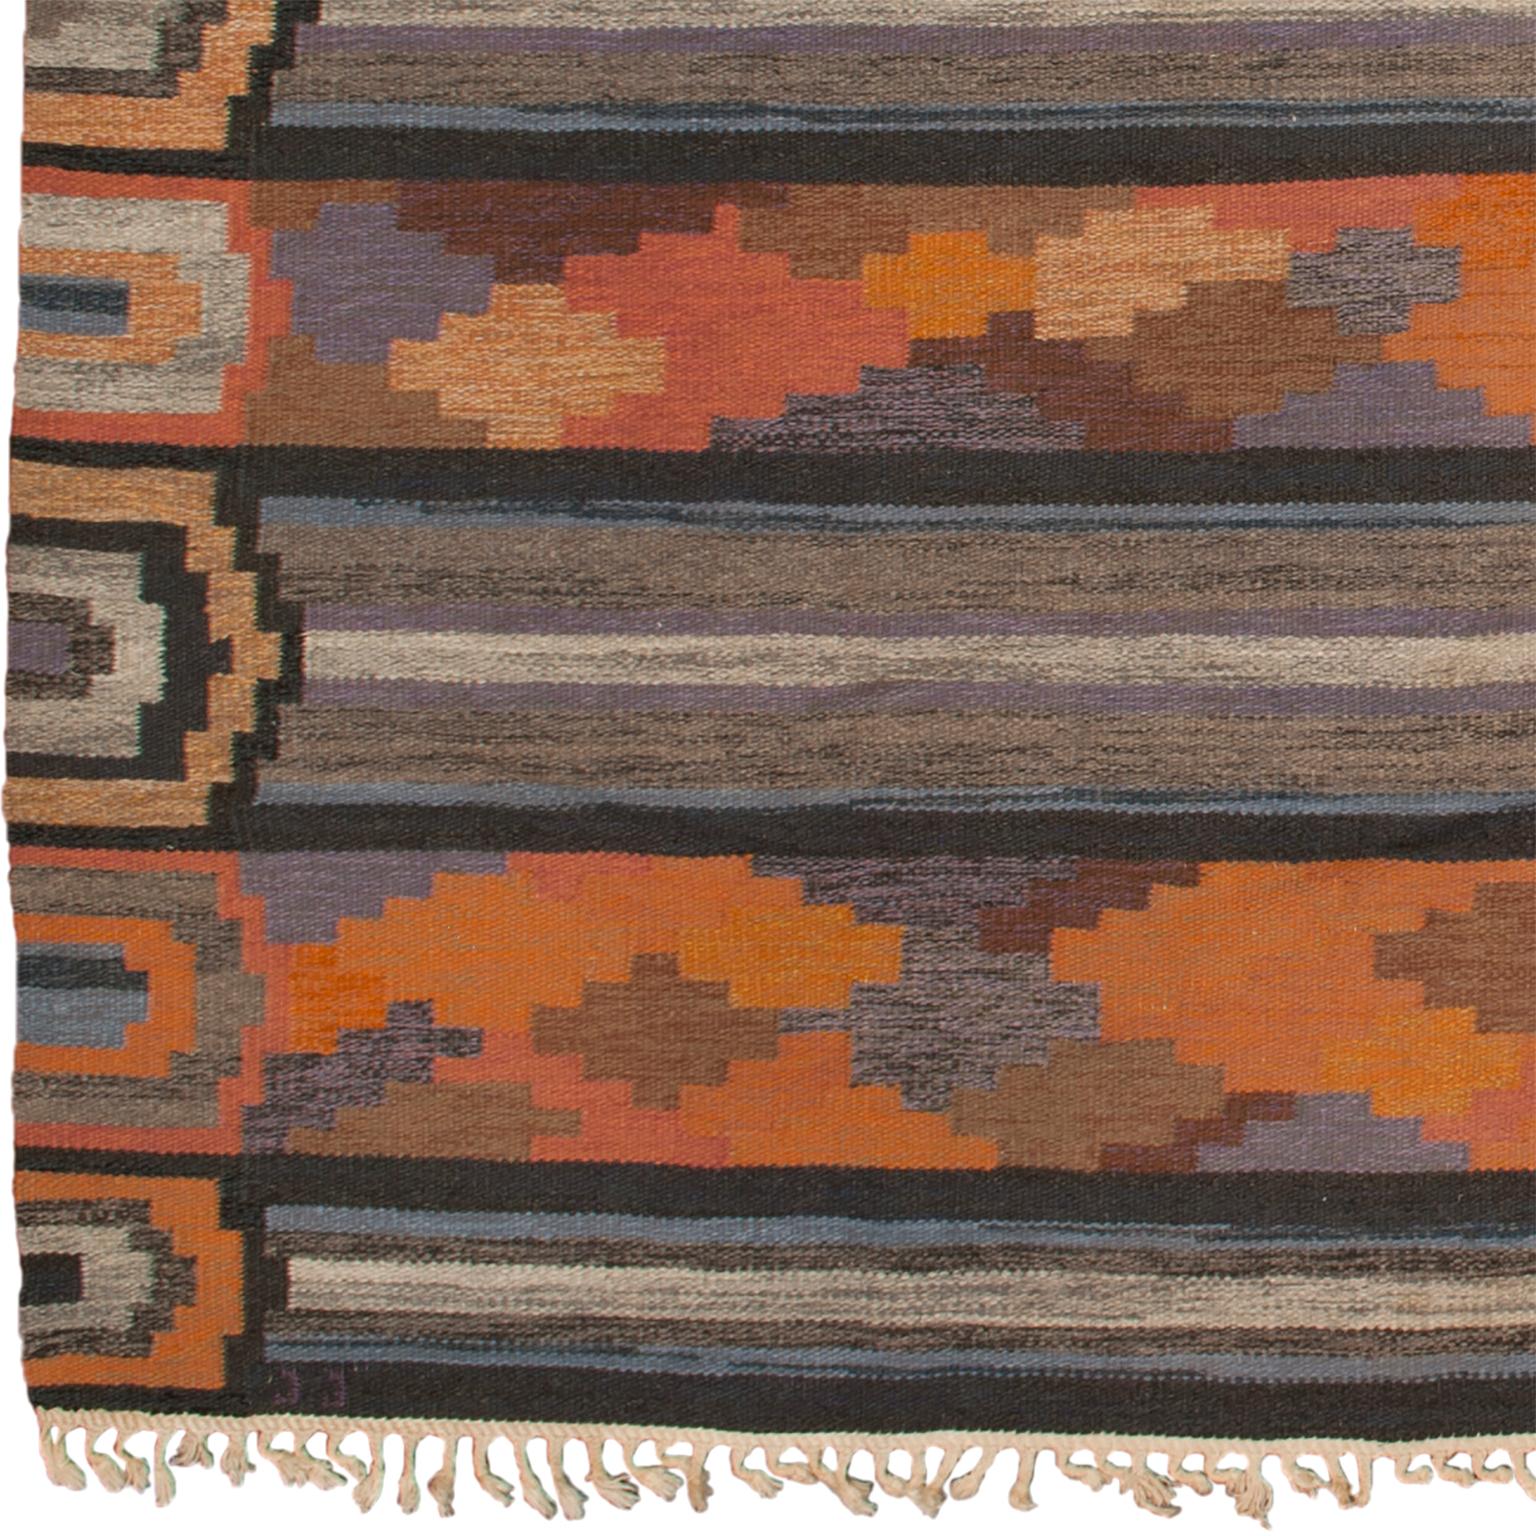 Swedish flat-weave rug by Judith Johansson
Sweden, circa 1950s.
Handwoven
Initialled: JJ (Judith Johansson).